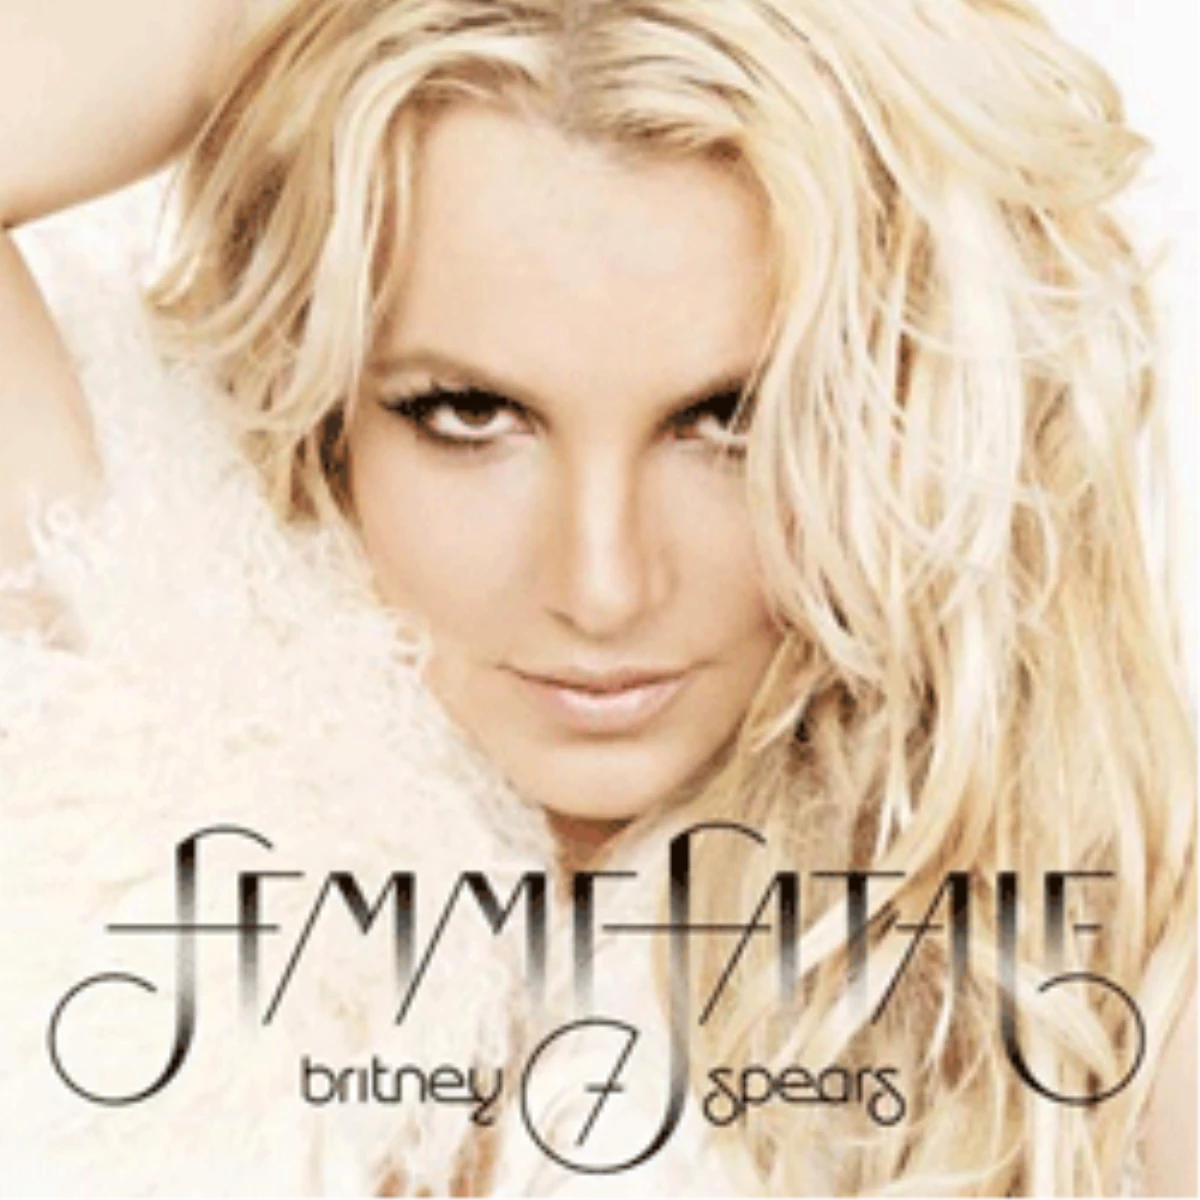 Britney’e Kutlama "Femme Fatale İstanbul"
